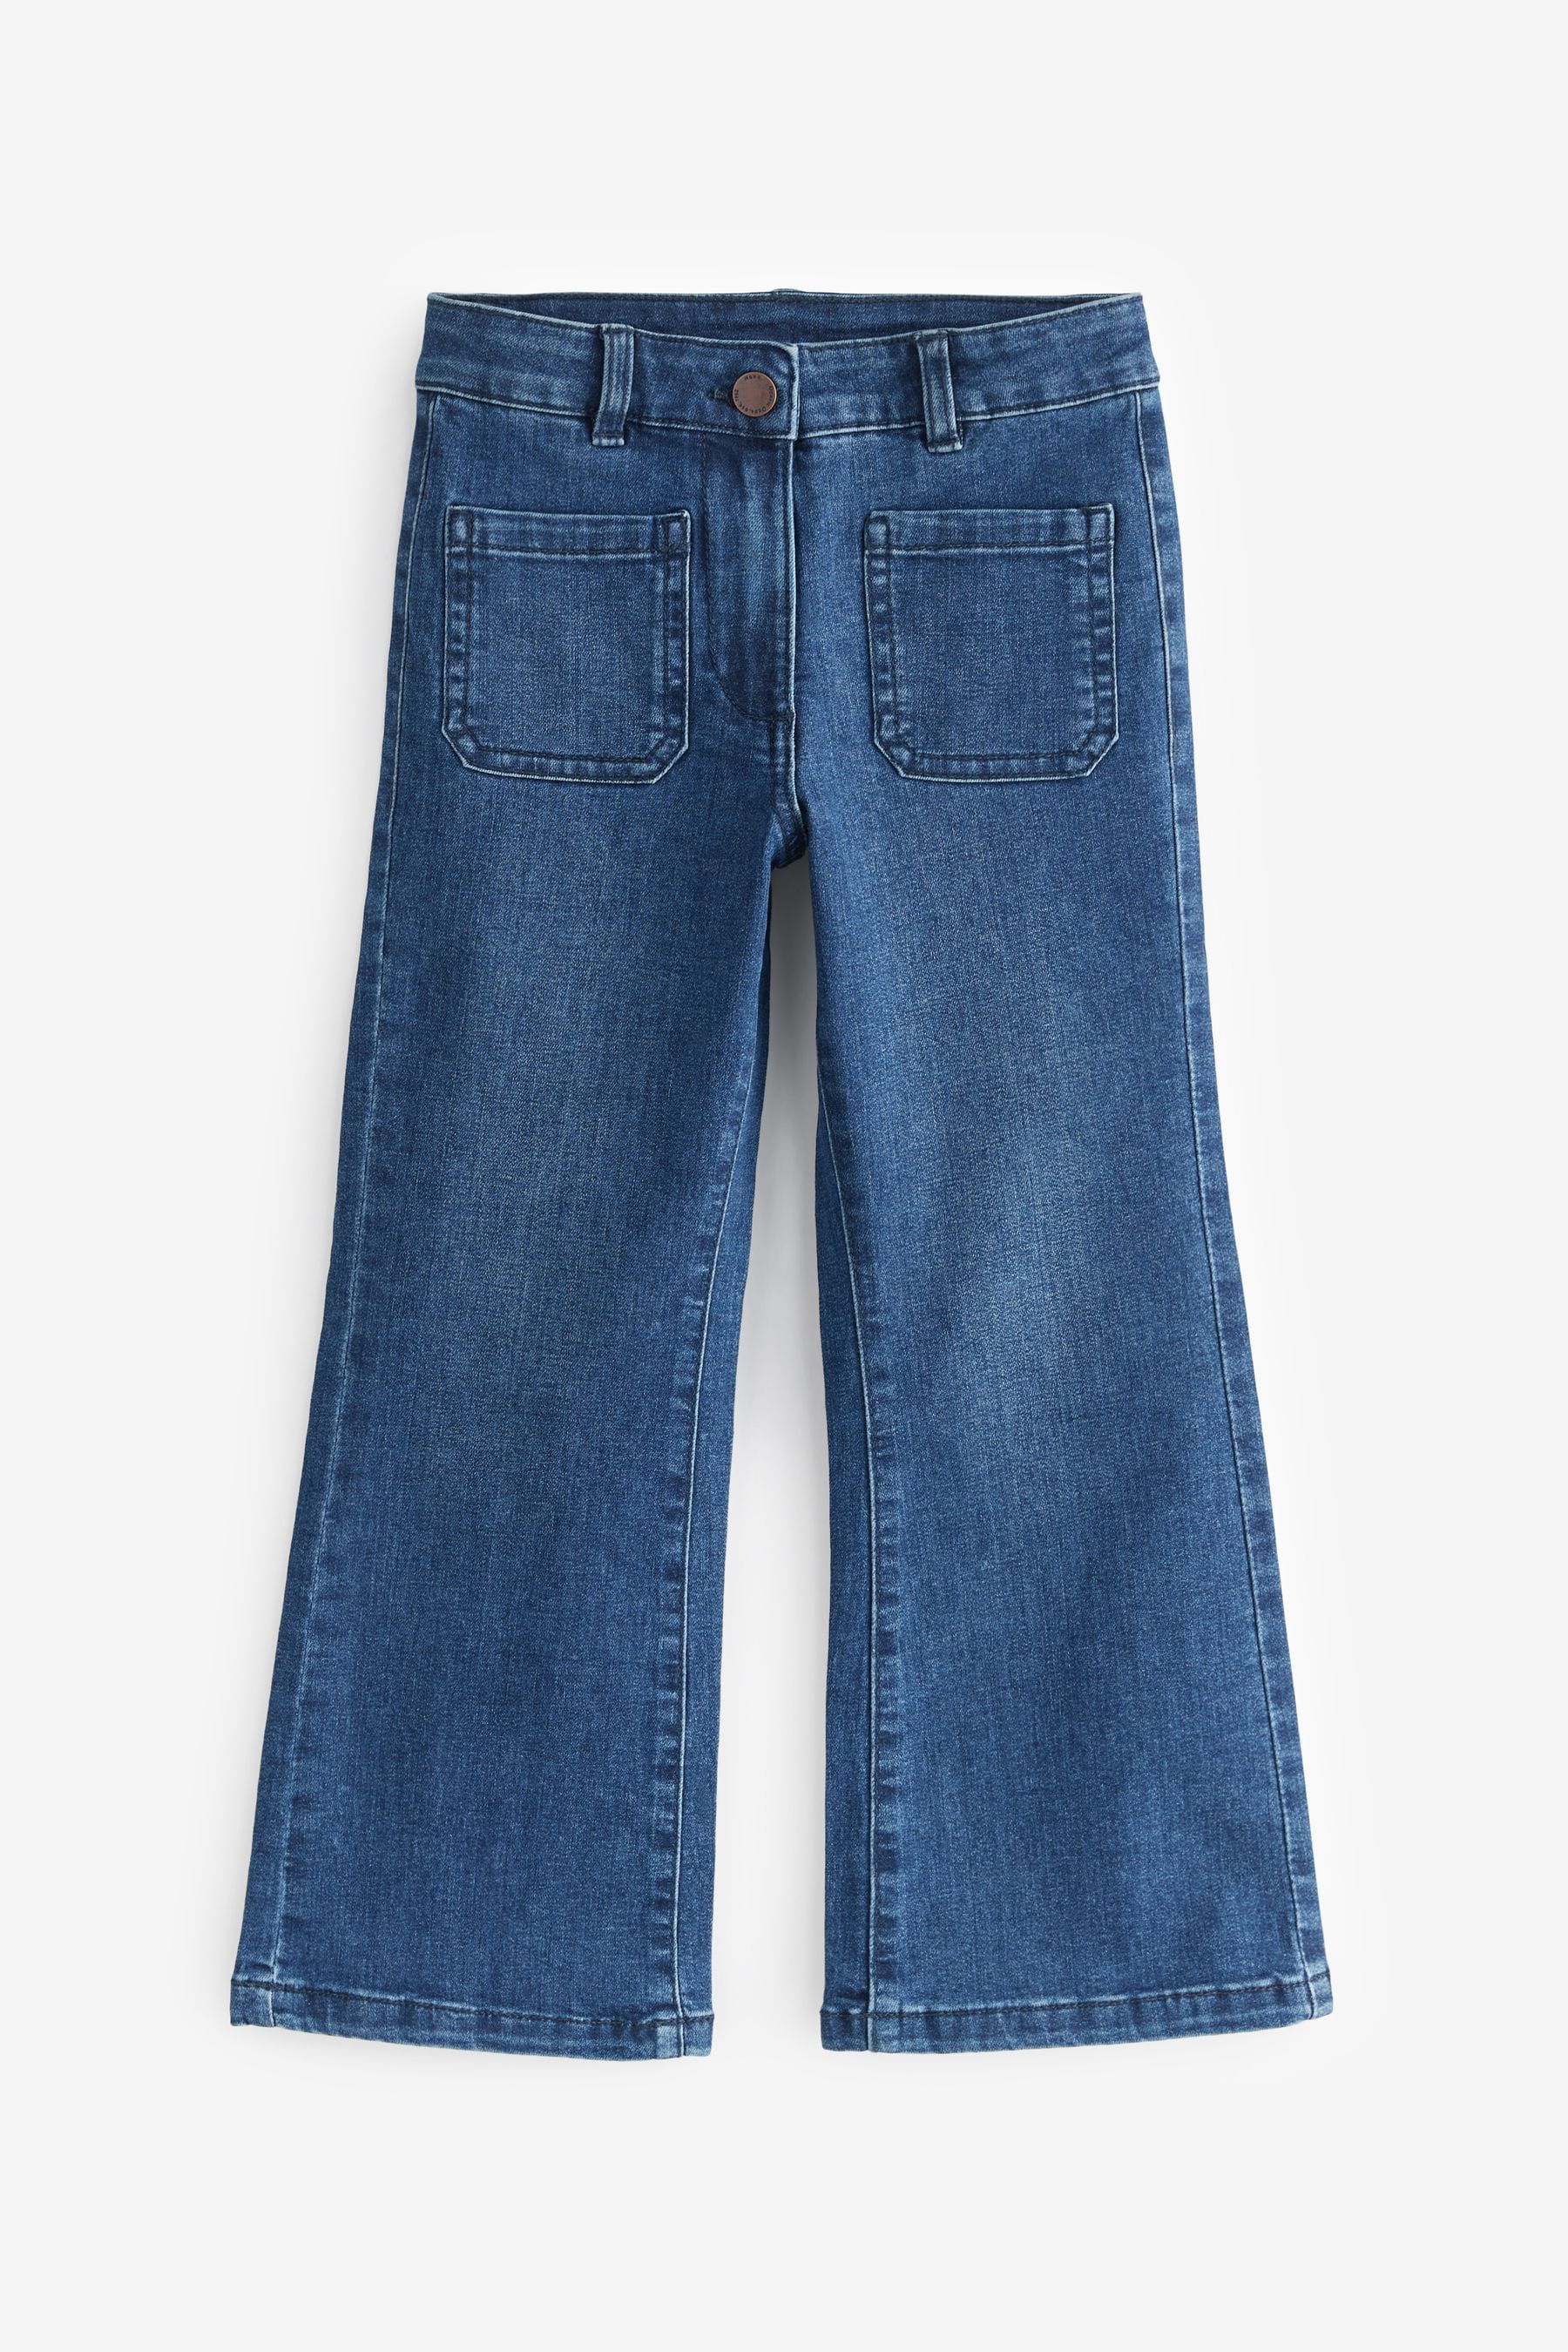 شلوار جینز 20797 سایز 3 تا 13 سال مارک NEXT